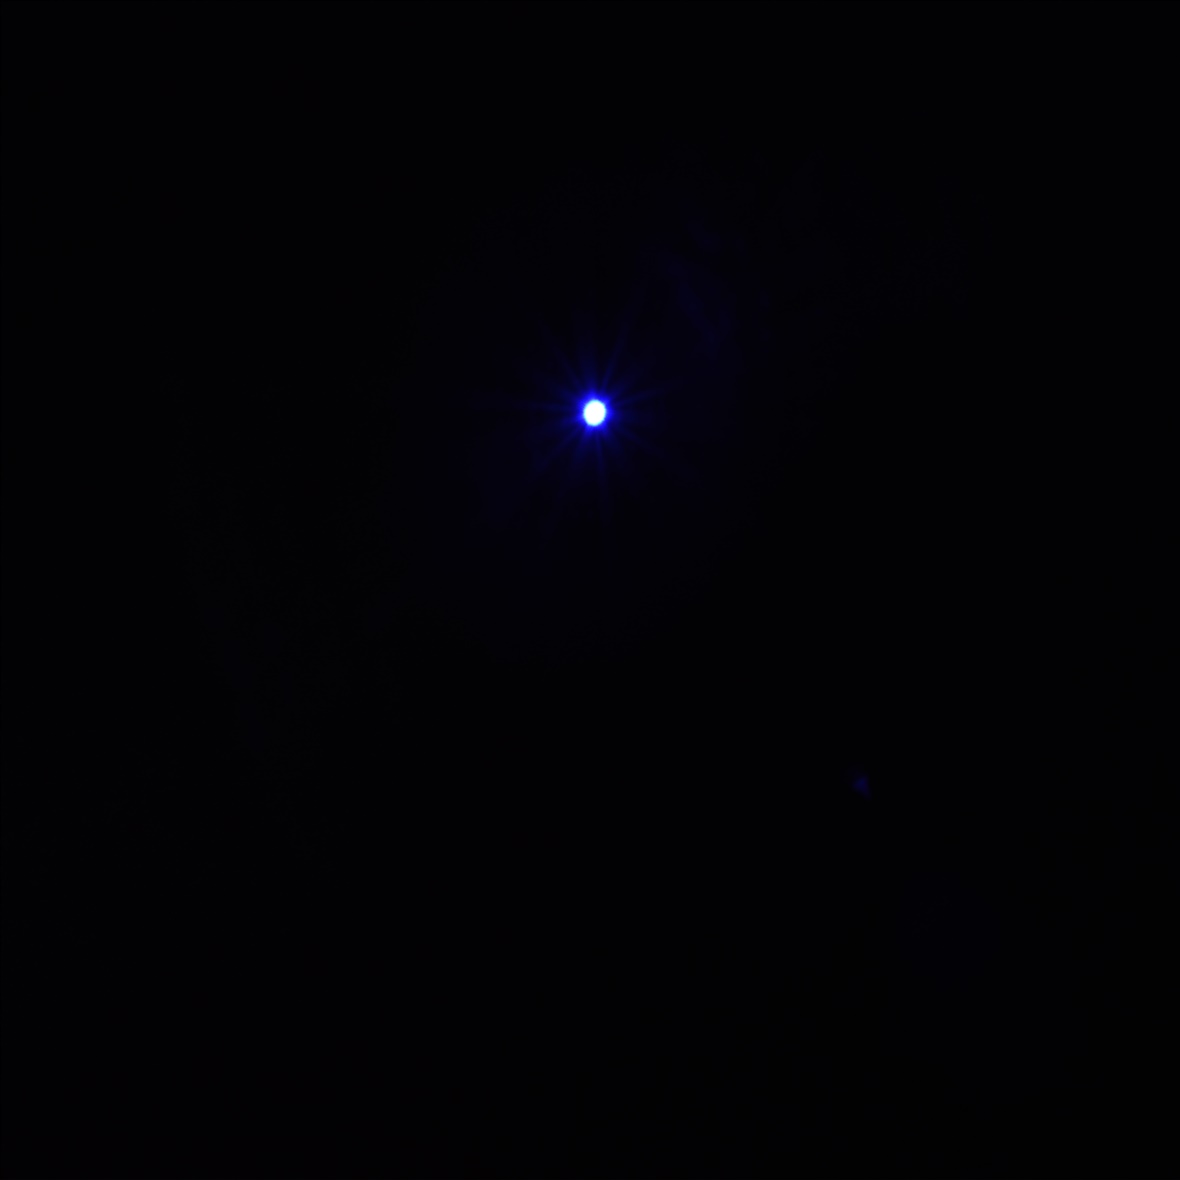 Mirino laser a luce blu a cinque punte da 10000 mW Argento